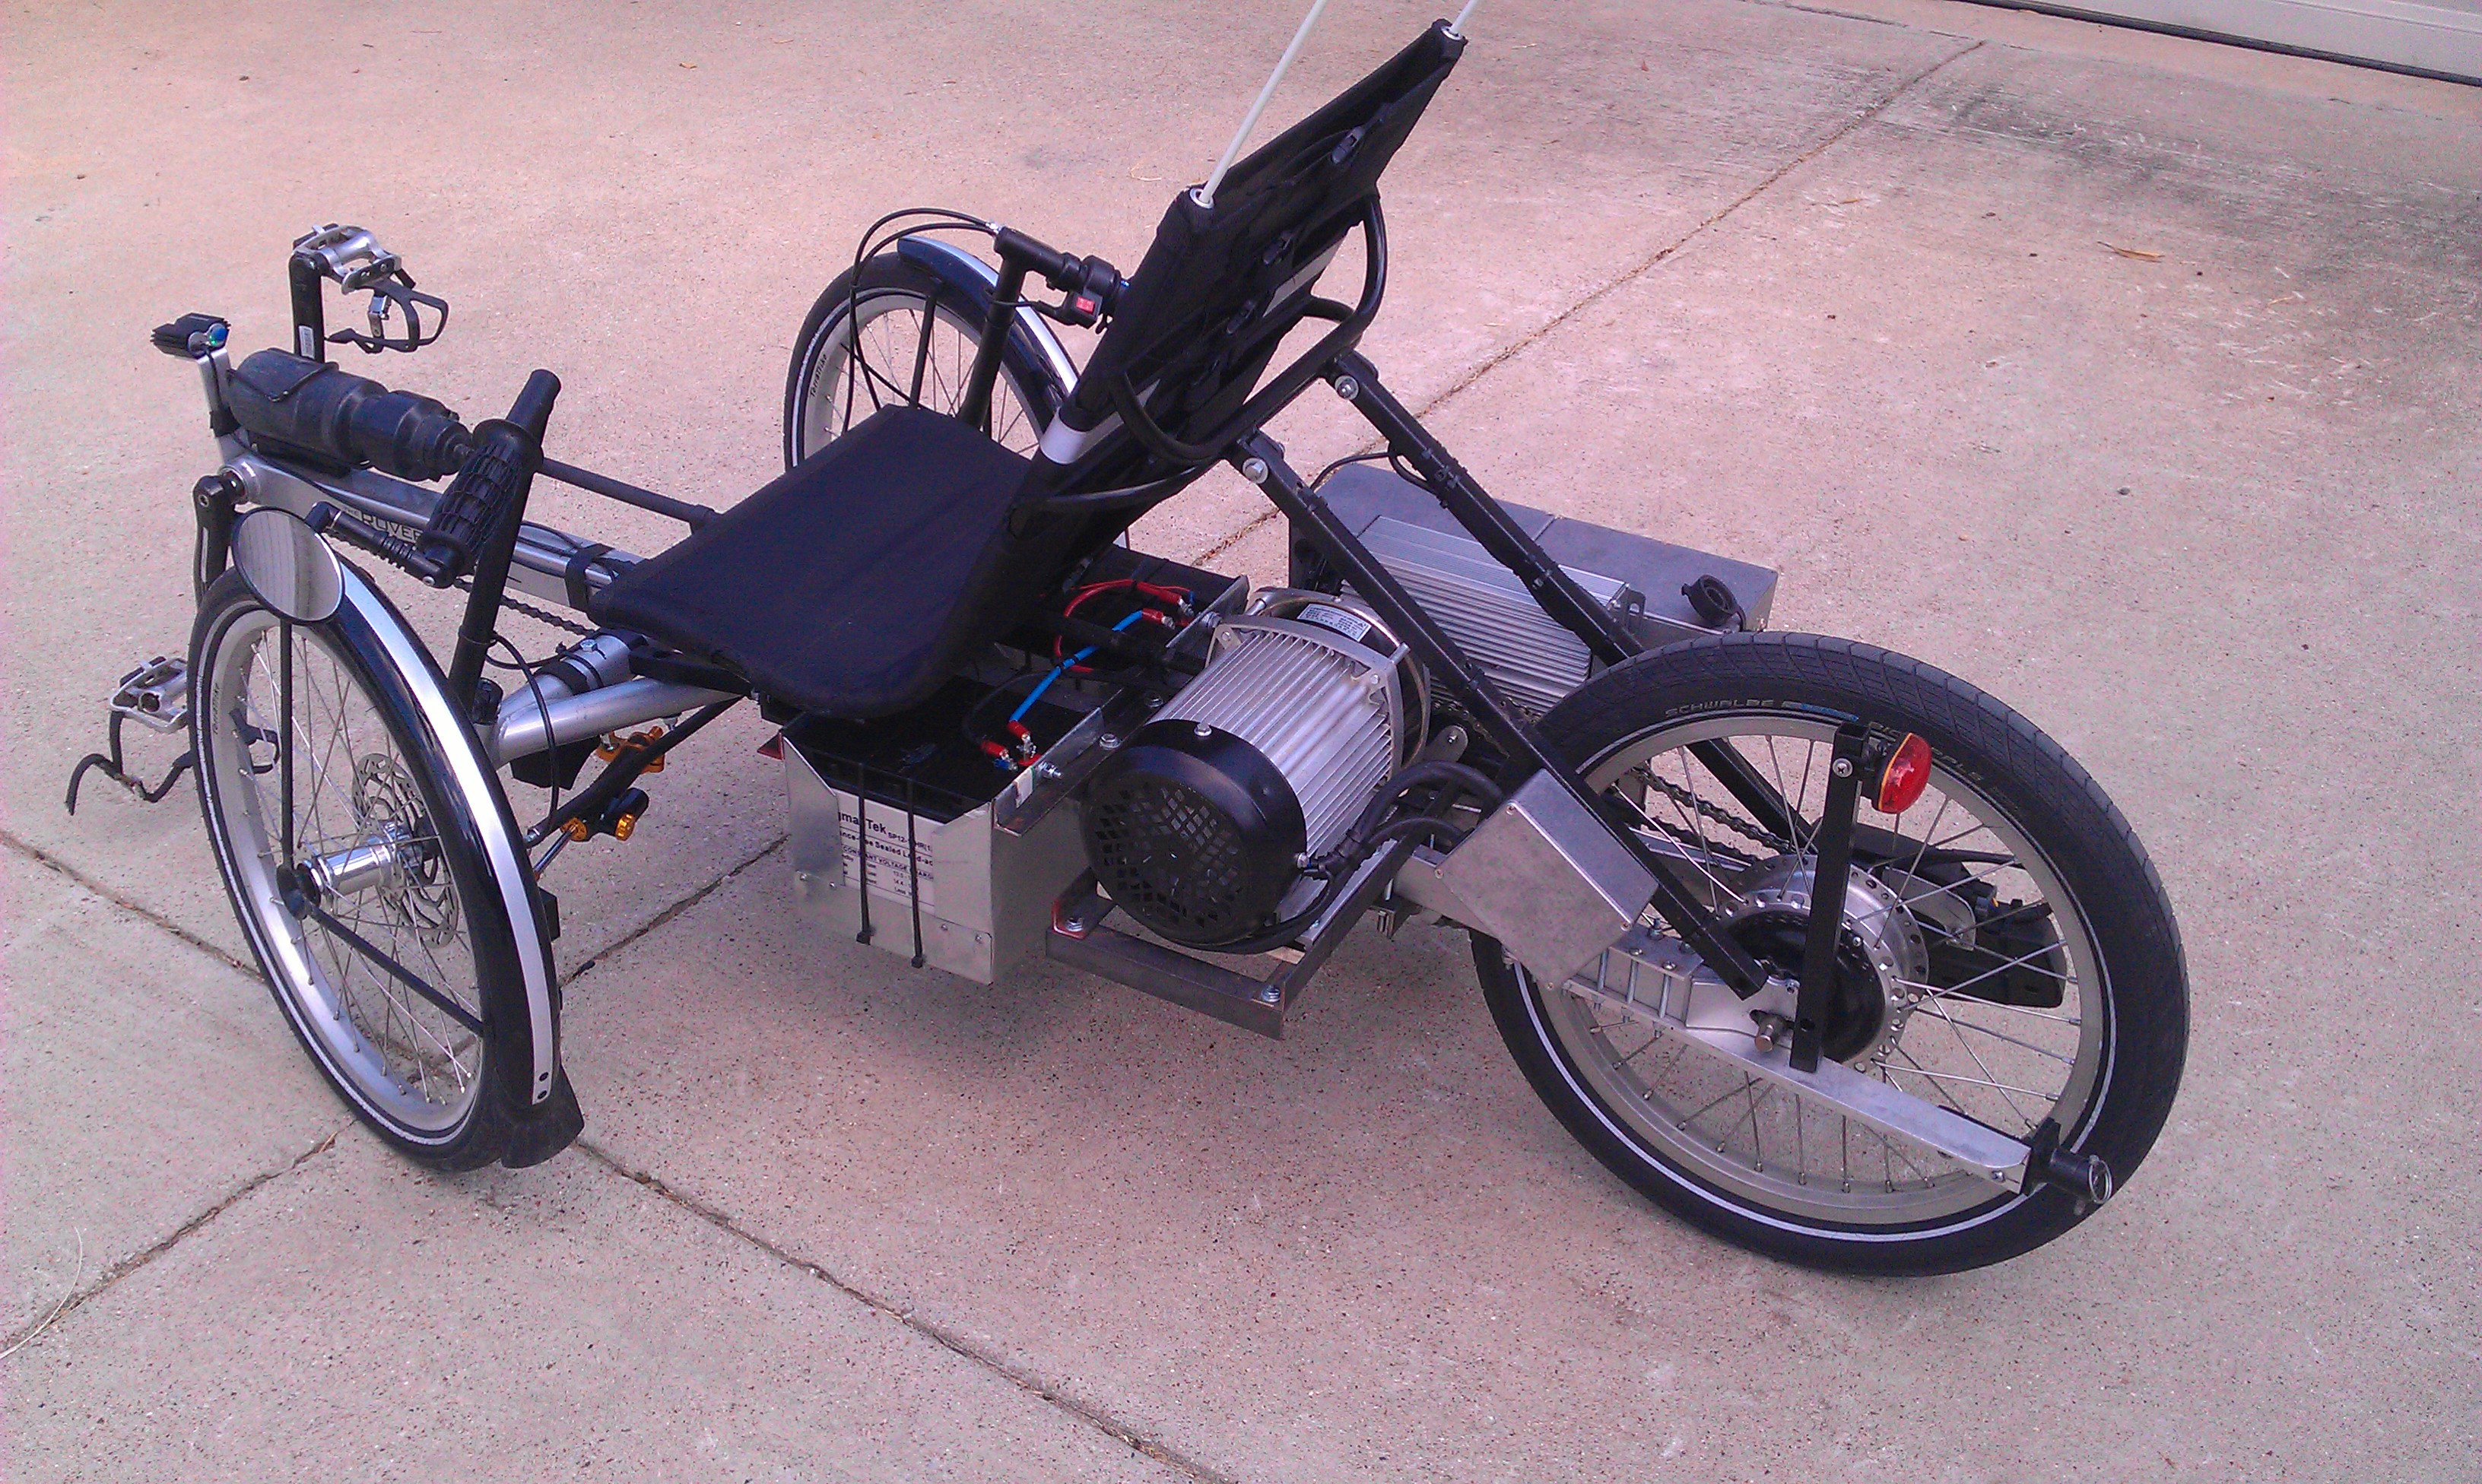 Best ideas about DIY Trike Kits
. Save or Pin beautiful DIY electric trike UU MOTOR FORUM Now.